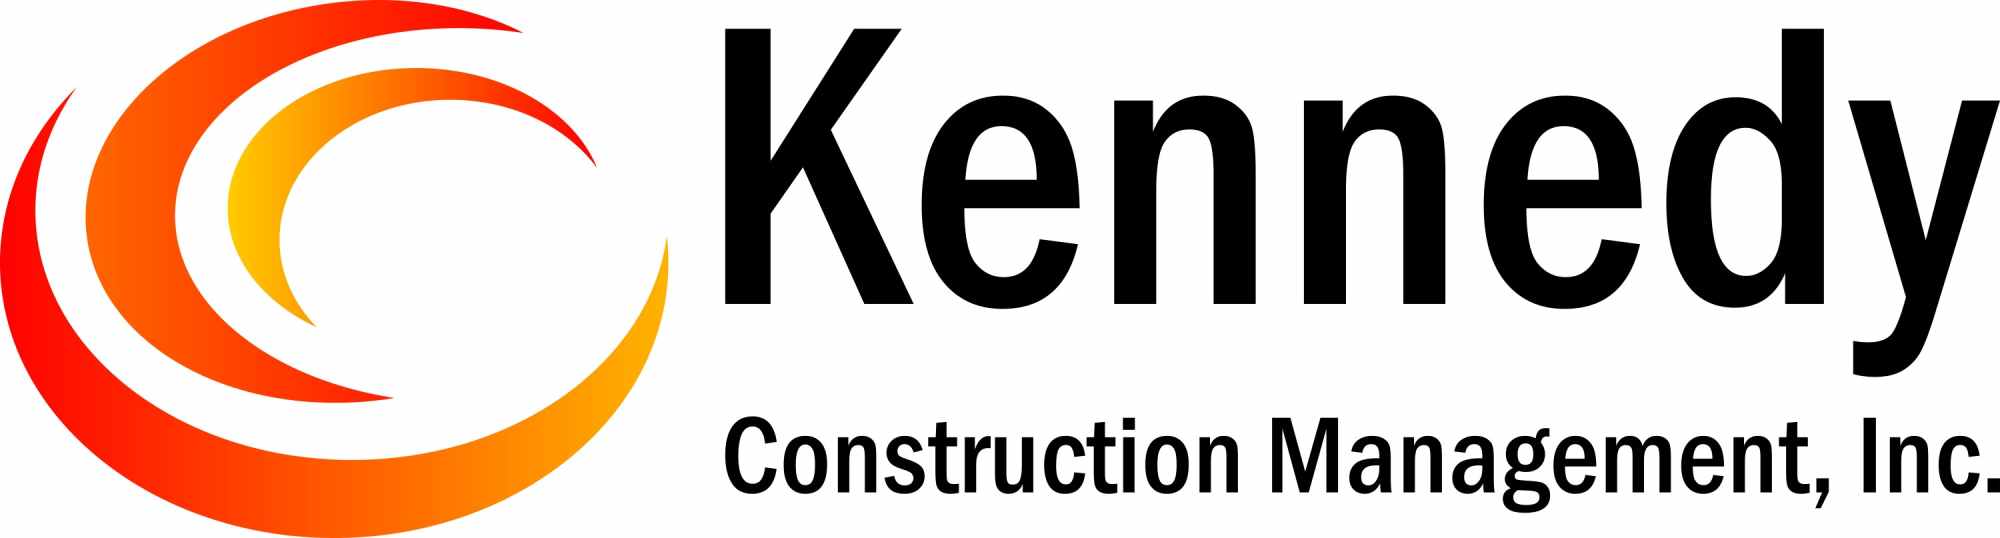 Kennedy Construction Management, Inc | WRTP